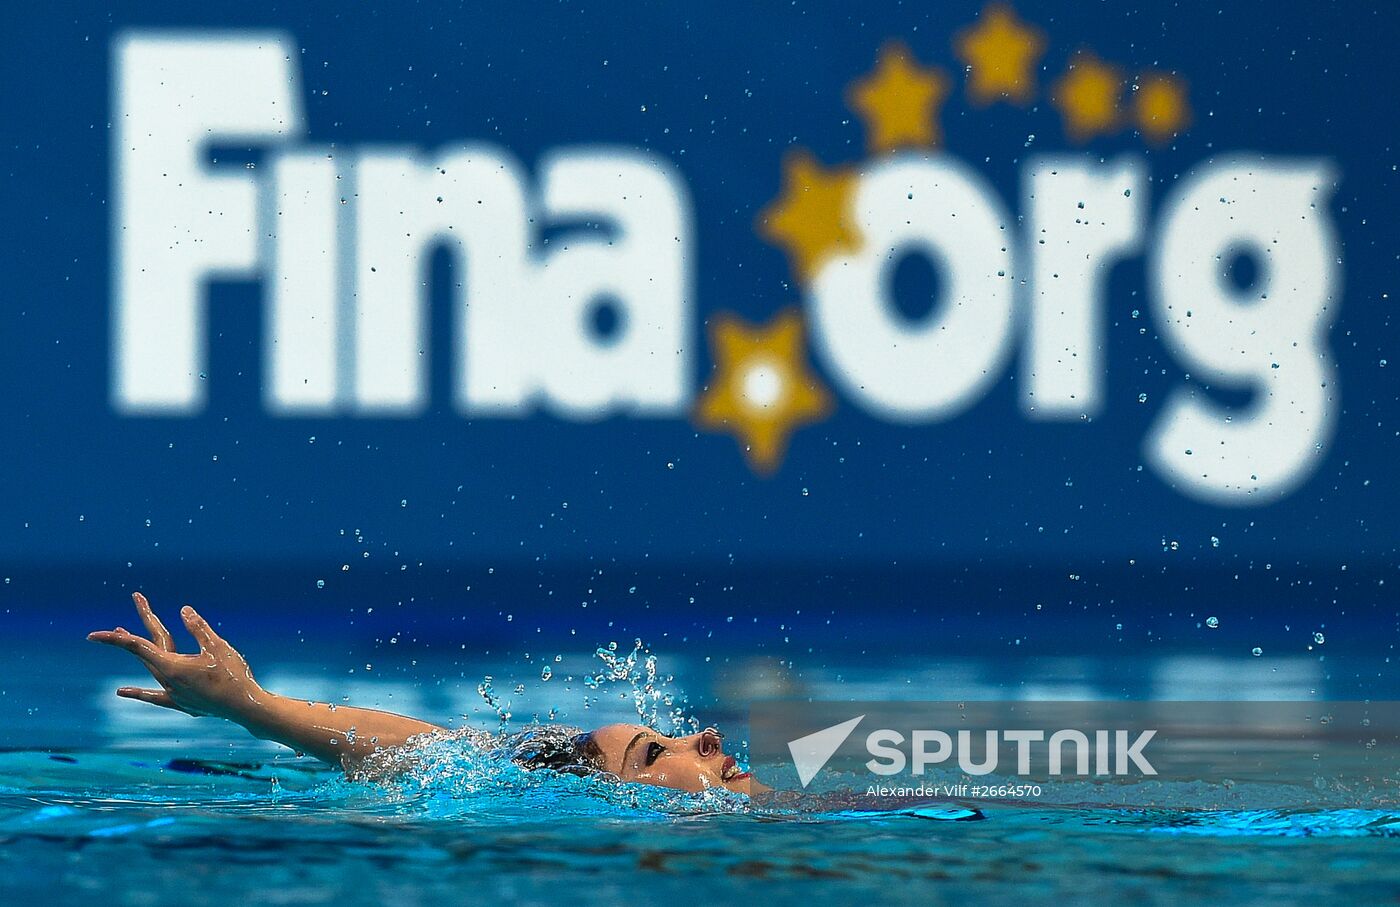 2015 FINA World Championships. Synchronized swimming. Solo technical. Preliminary round